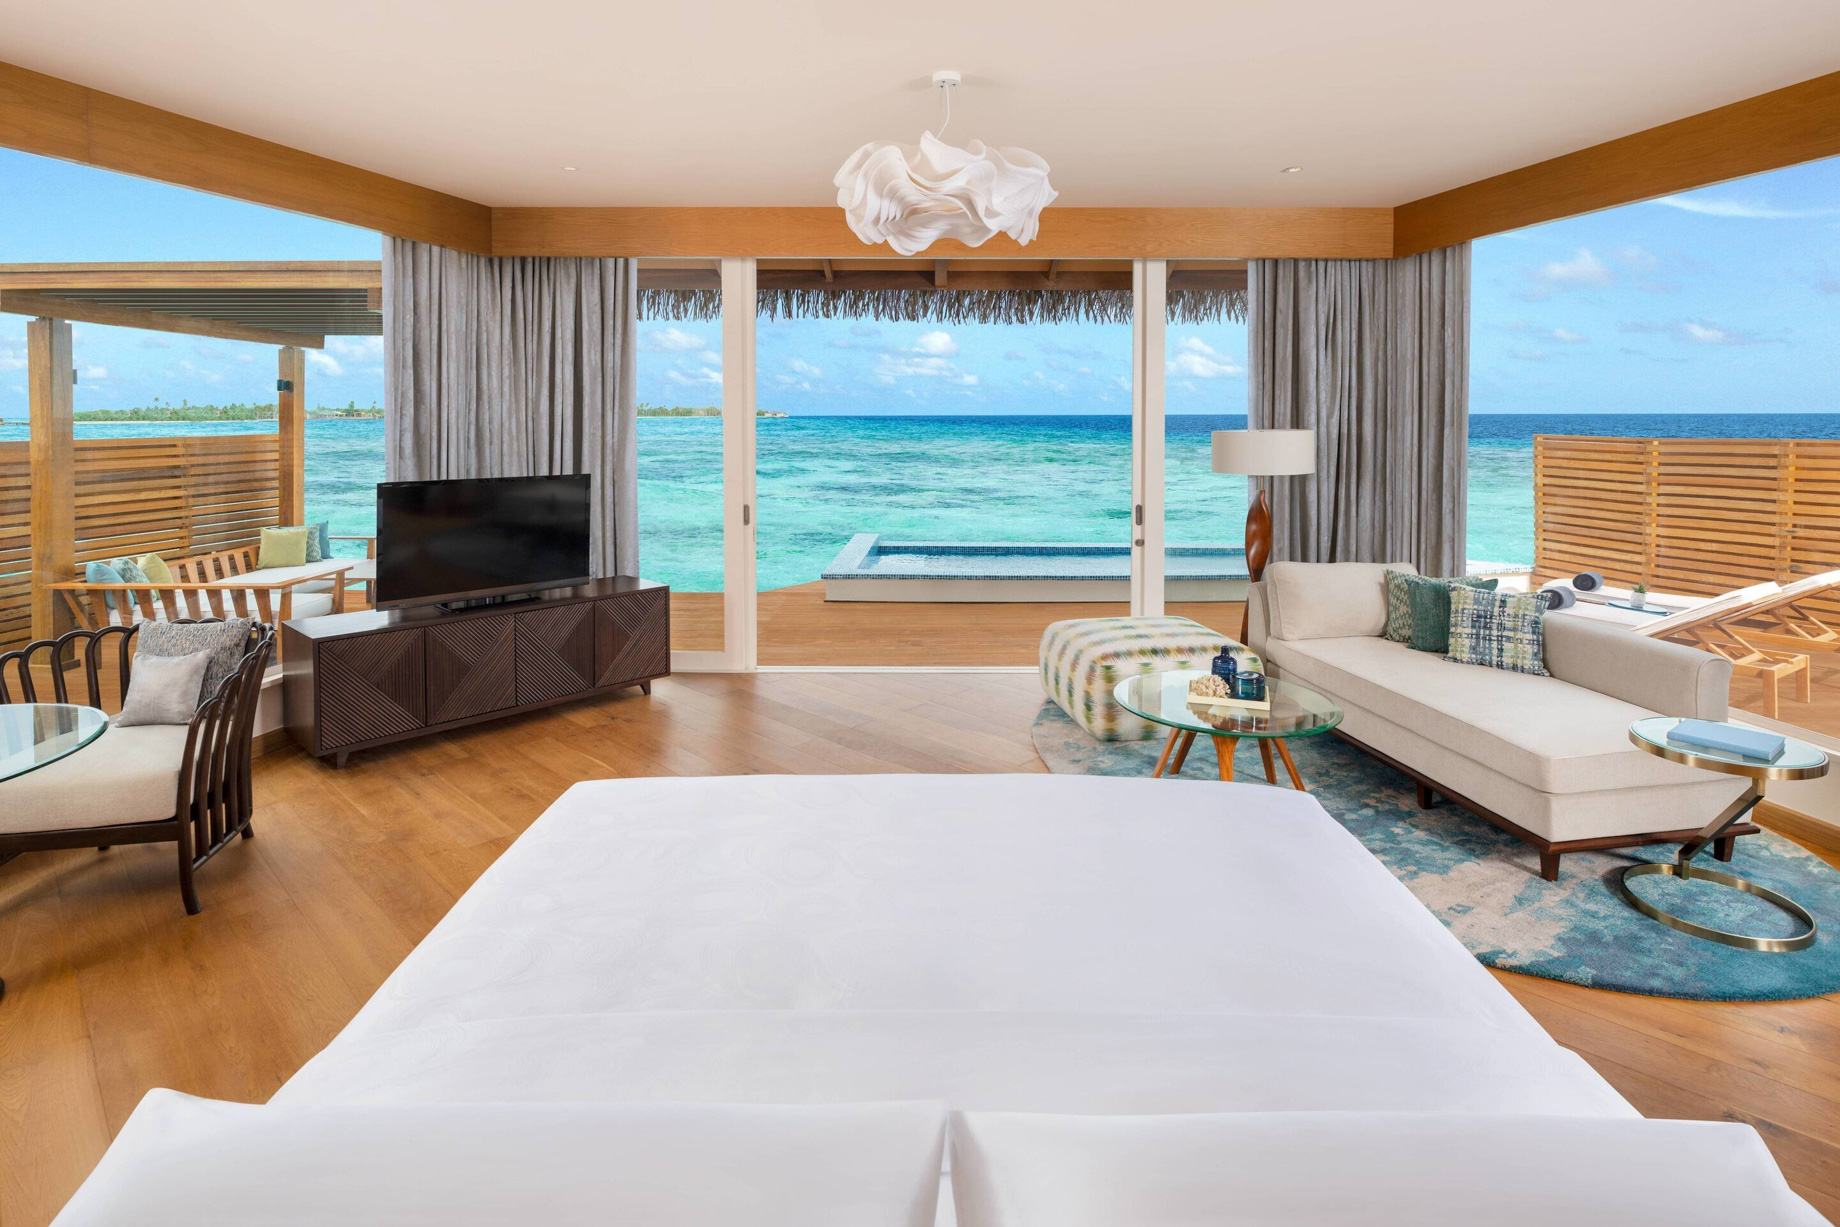 JW Marriott Maldives Resort & Spa – Shaviyani Atoll, Maldives – Duplex Overwater Pool Villa Bedroom